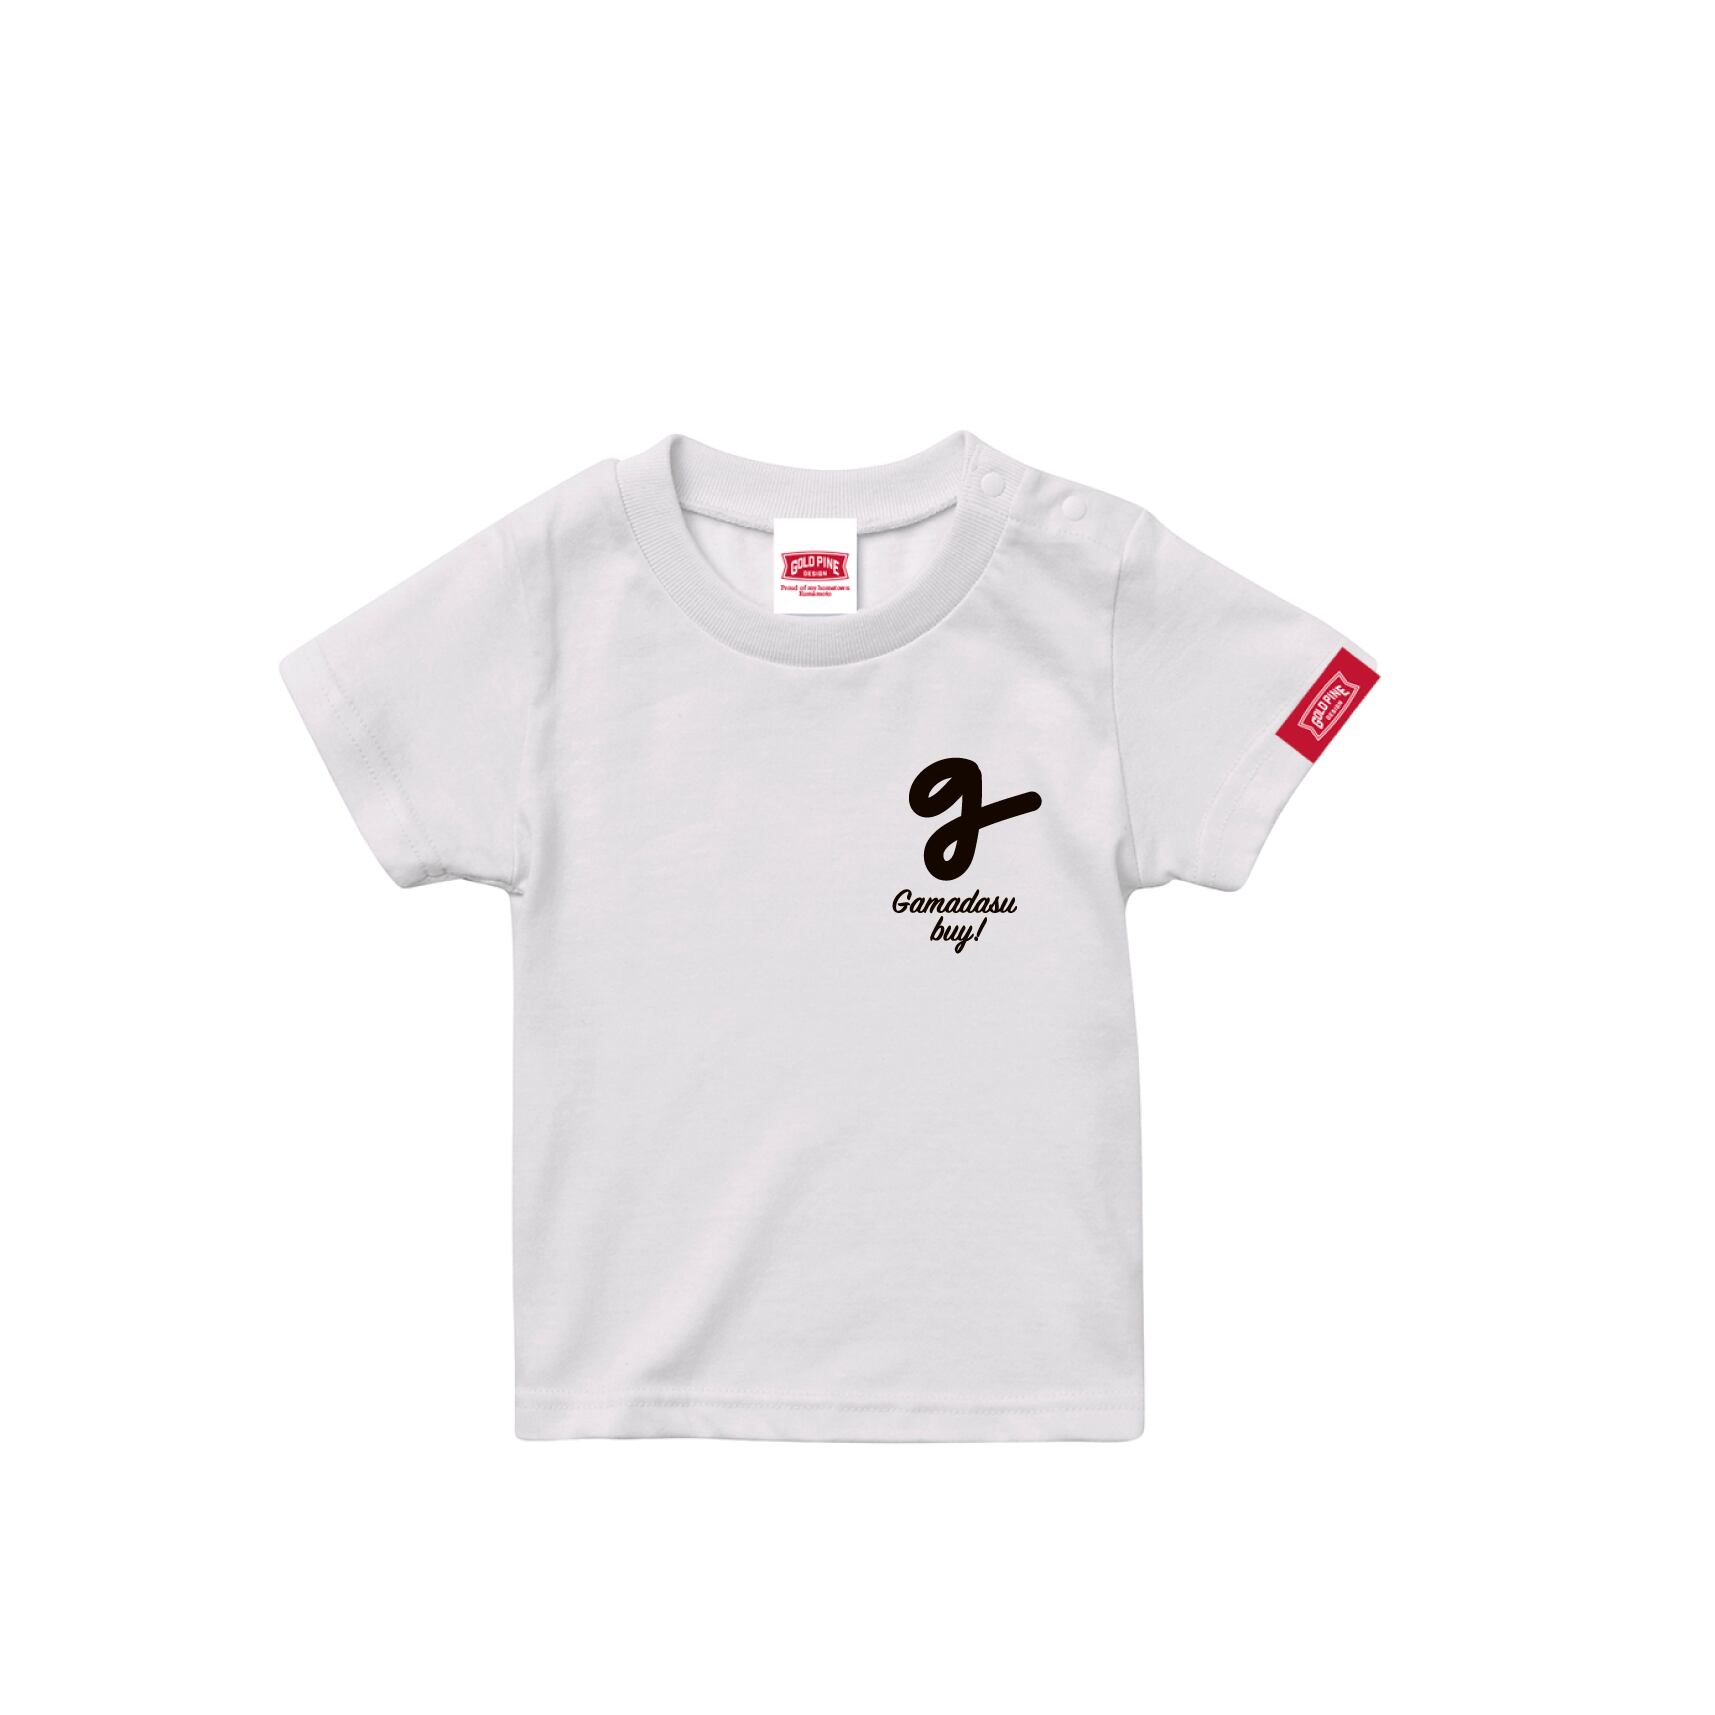 GAMADASUBUY-Tshirt【Kids】White